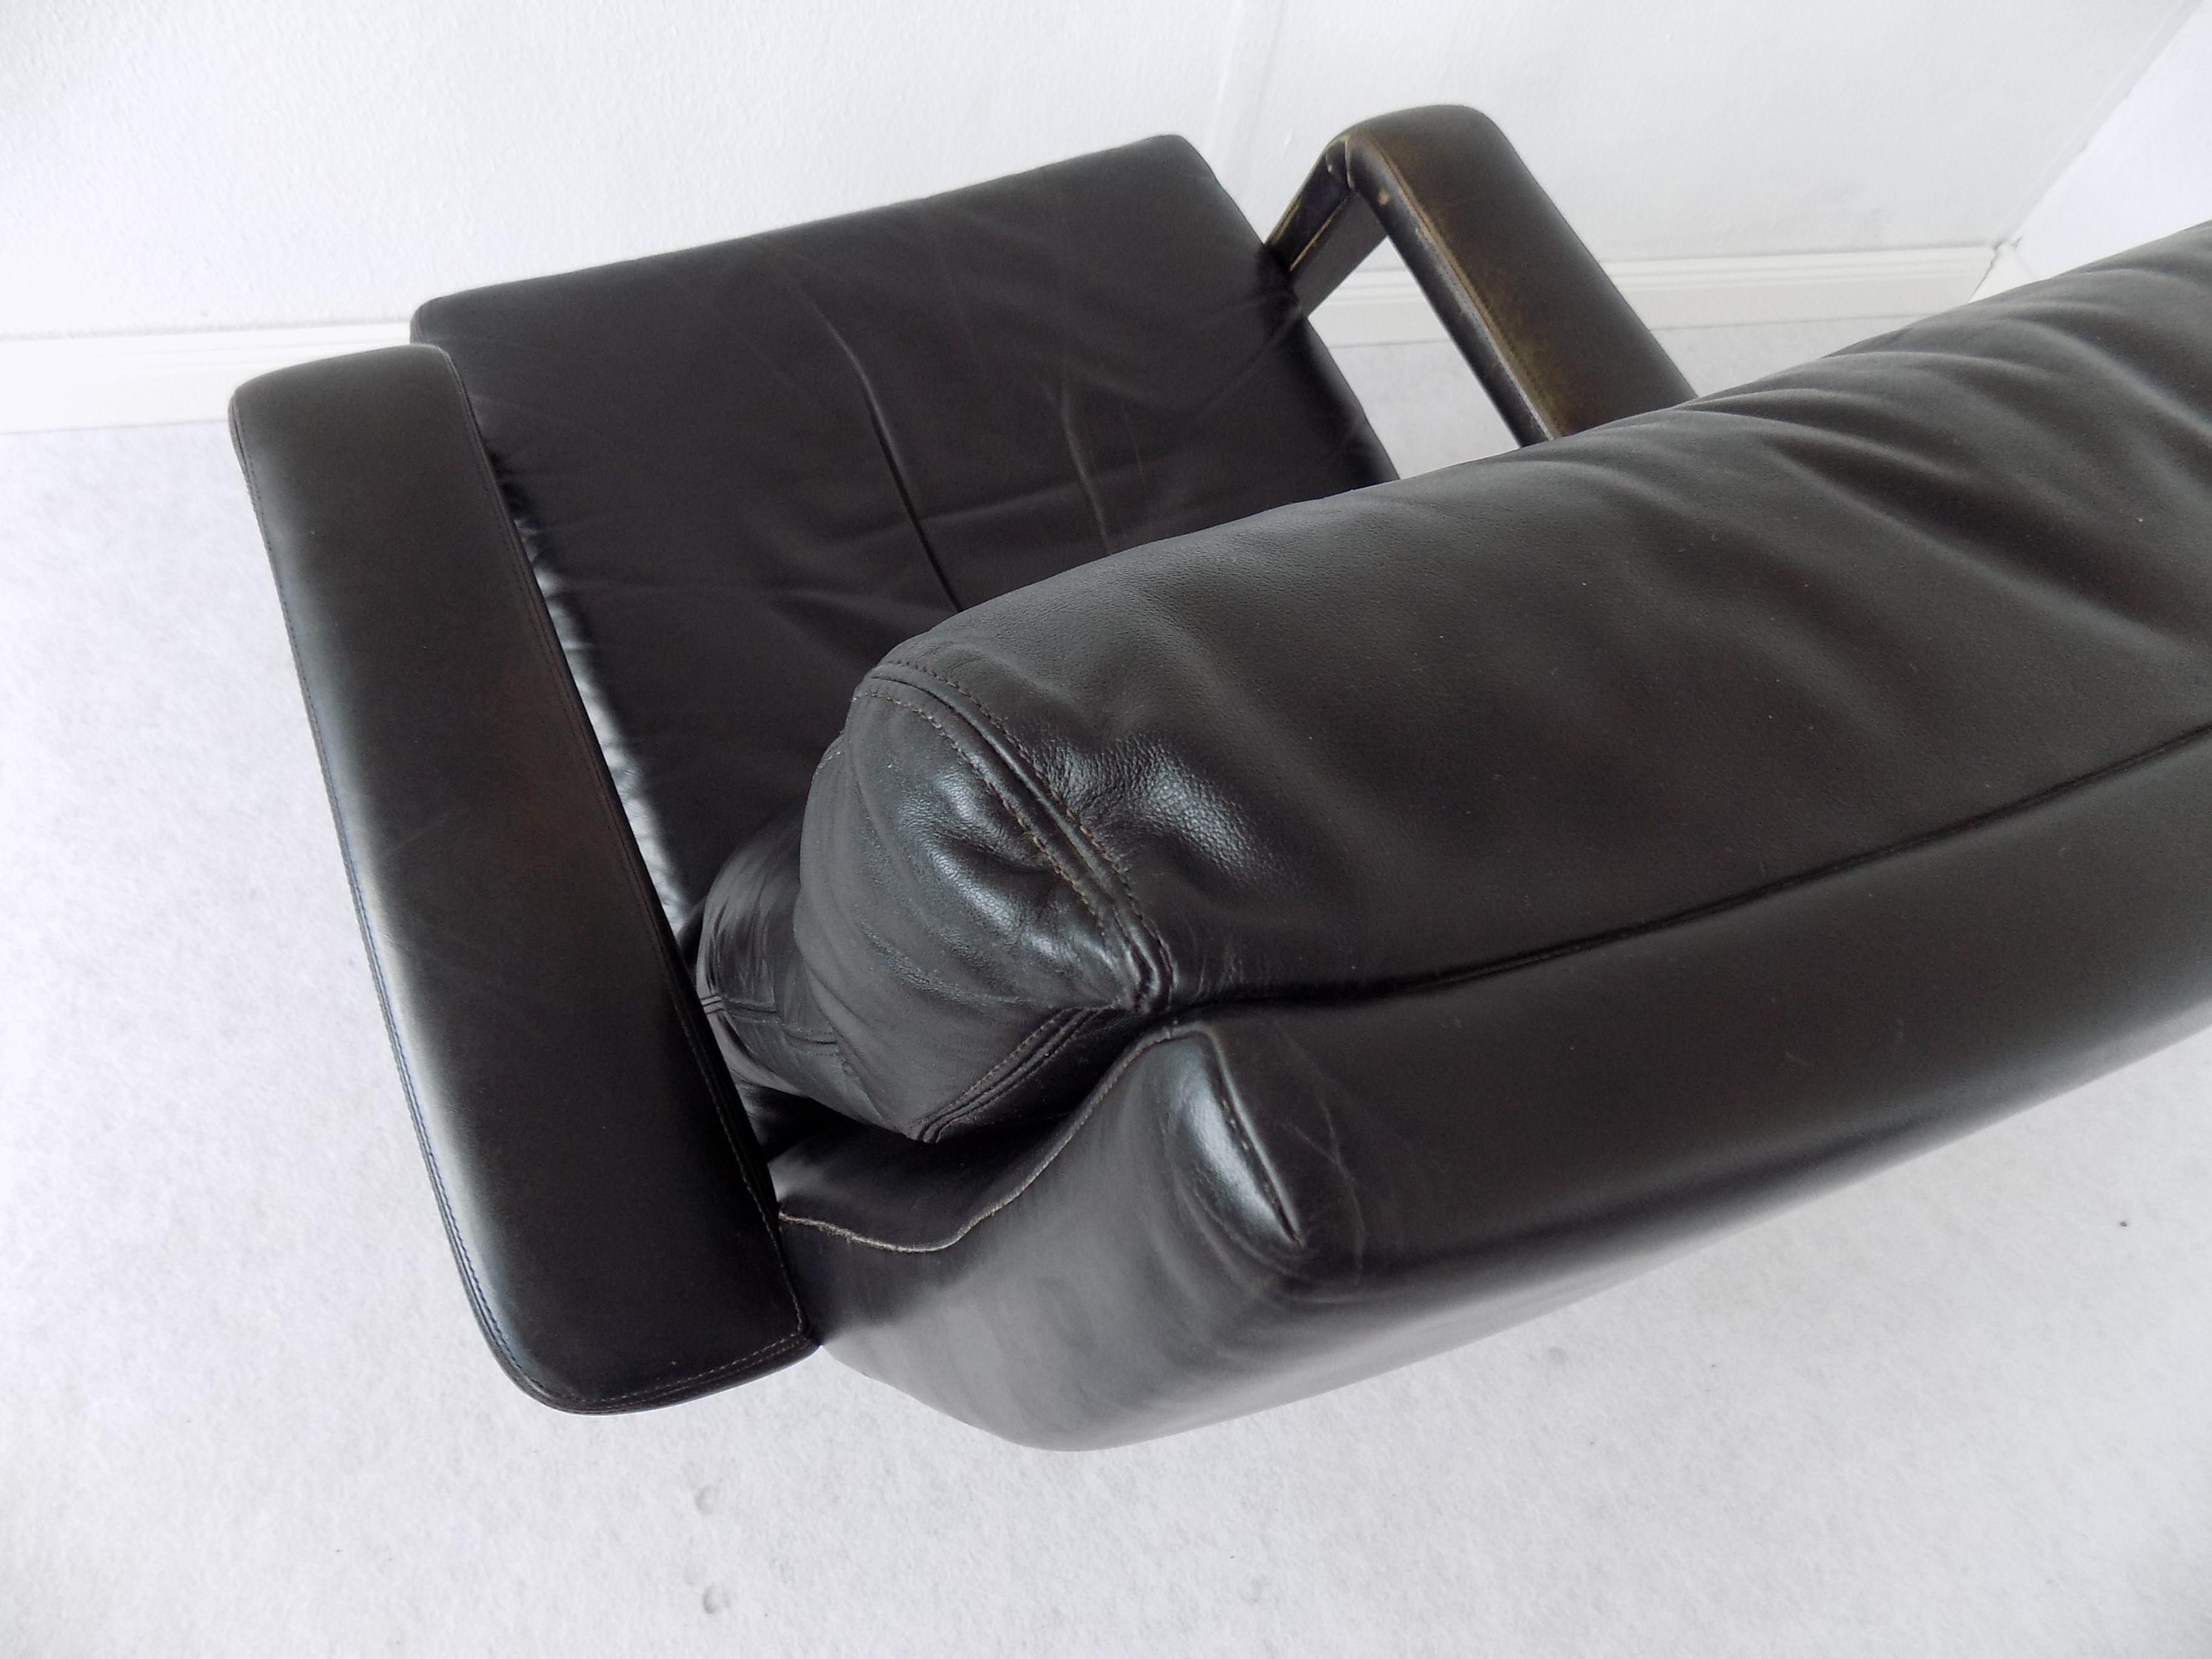 Hans Kaufeld Lounge Chair, German, Black leather, mid-century modern, swivel For Sale 12